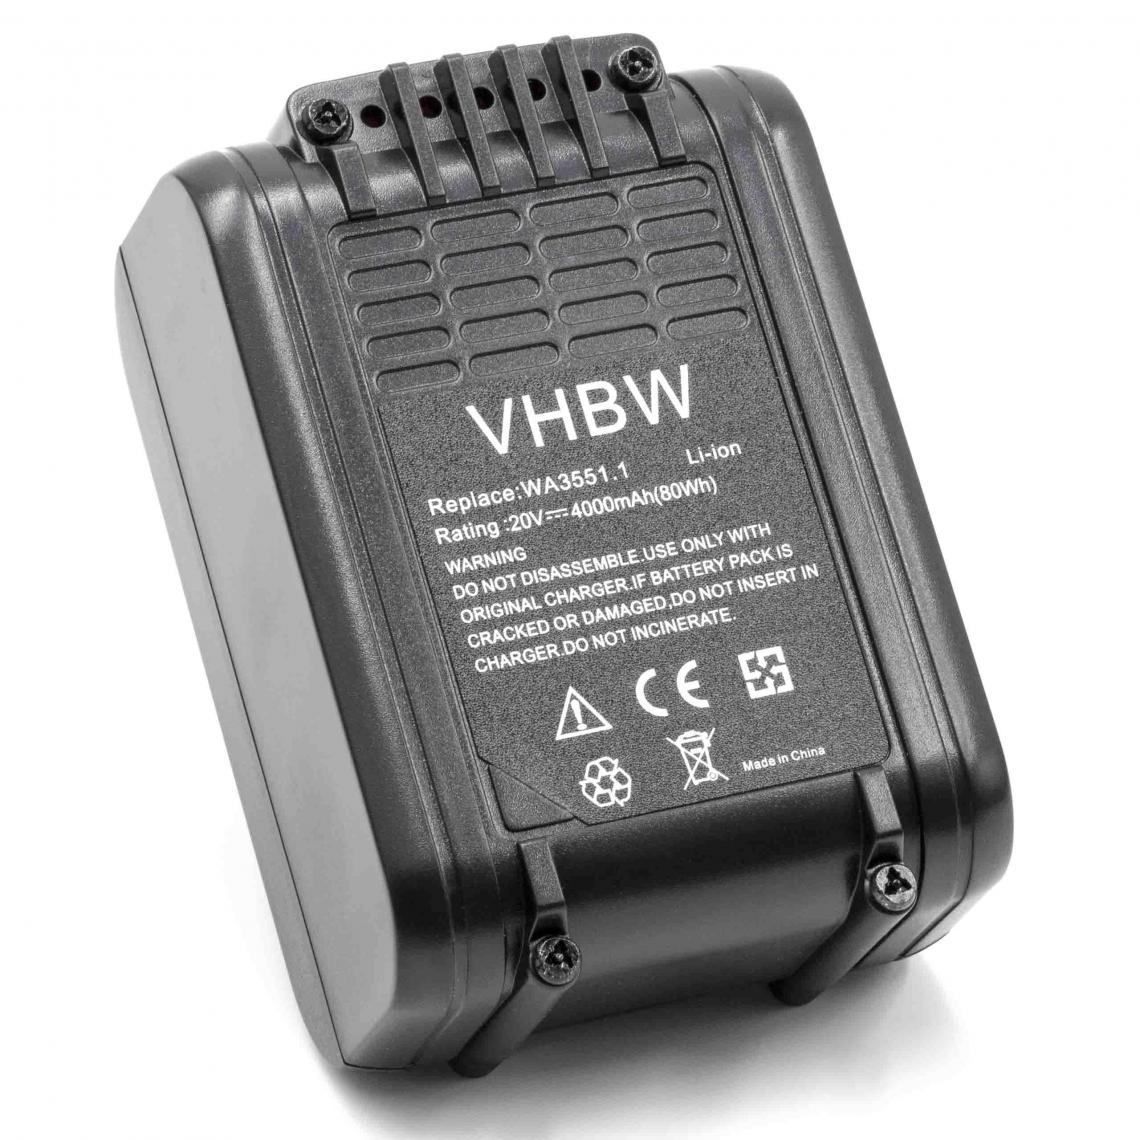 Vhbw - vhbw Batterie compatible avec Worx WG251, WG251.5, WG251E, WG255E, WG255E.5, WG259, WG259E outil électrique (4000mAh Li-ion 20 V) - Clouterie